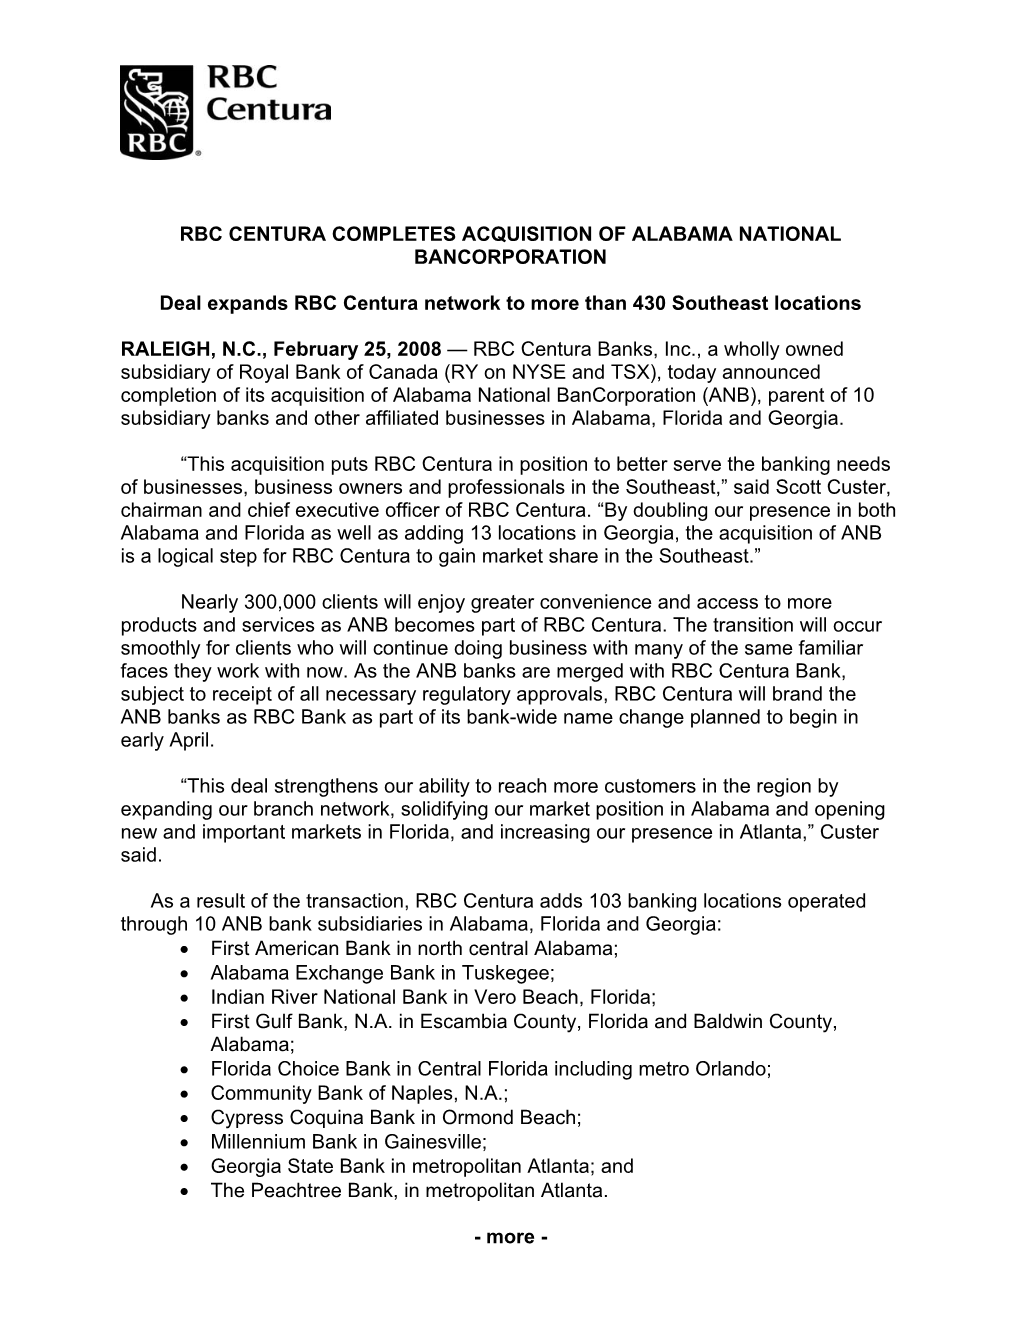 Rbc Centura Completes Acquisition of Alabama National Bancorporation